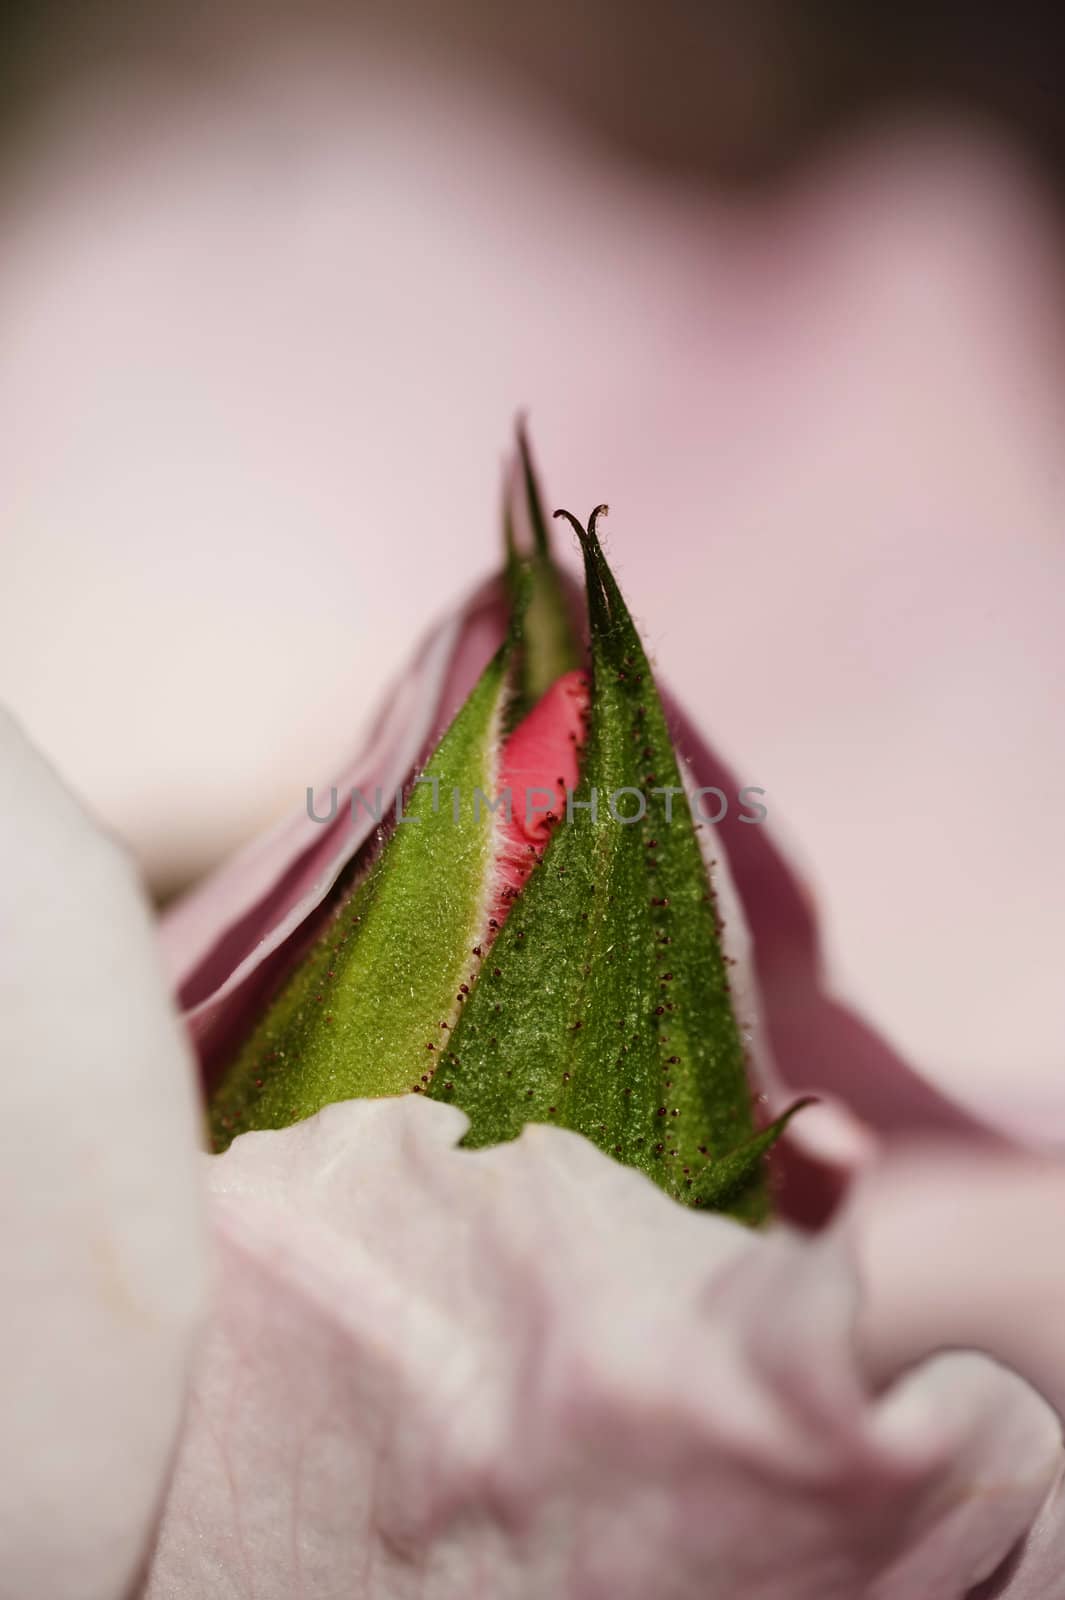 Ornamental rose bud among pink petals